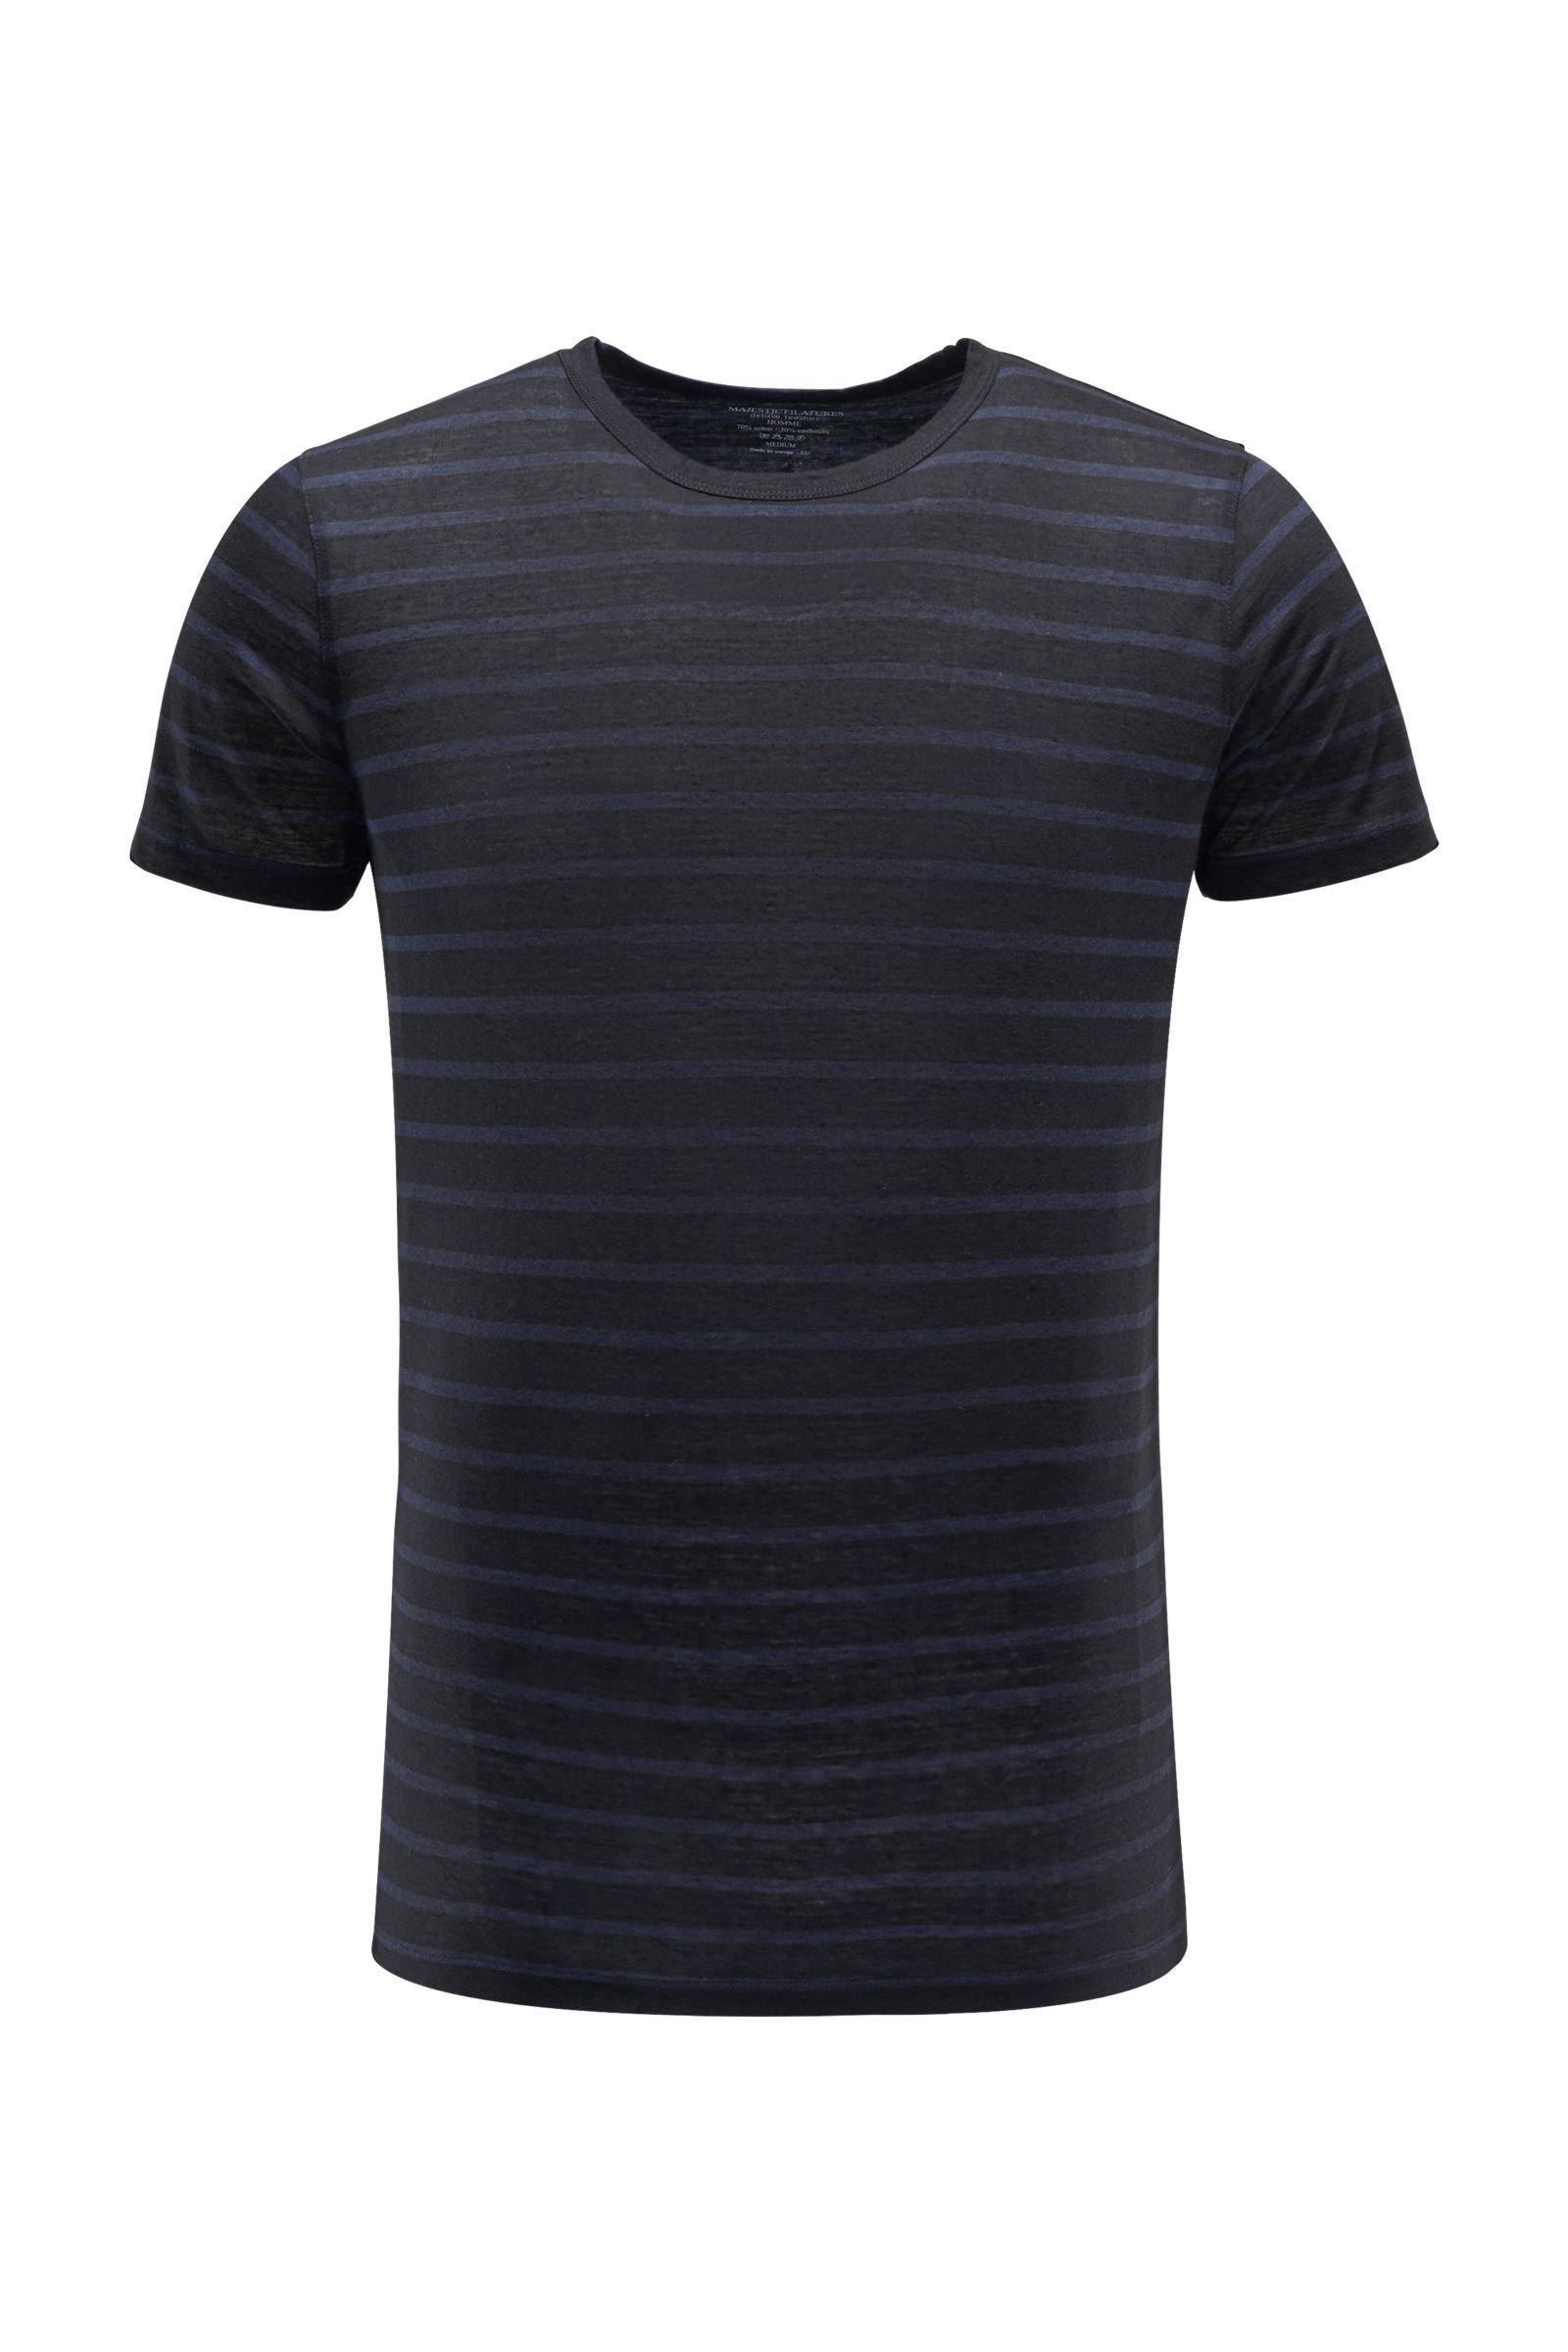 Crew neck T-shirt black/navy striped